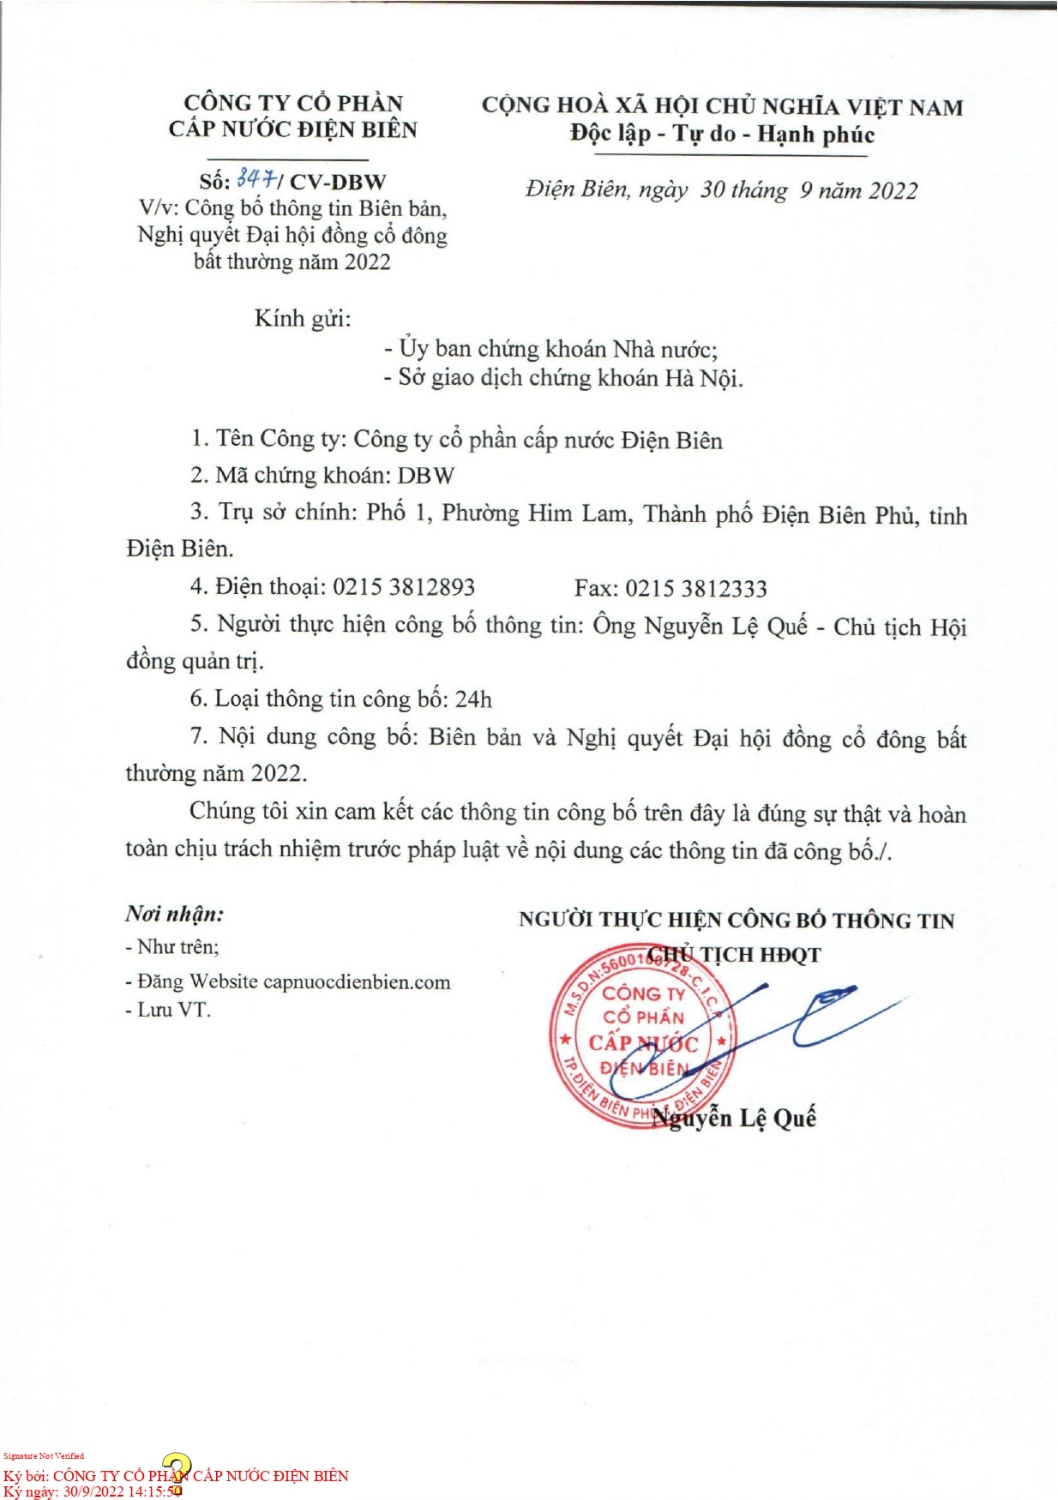 cong bo thong tin DHDCDBT 2022 1 page 0001